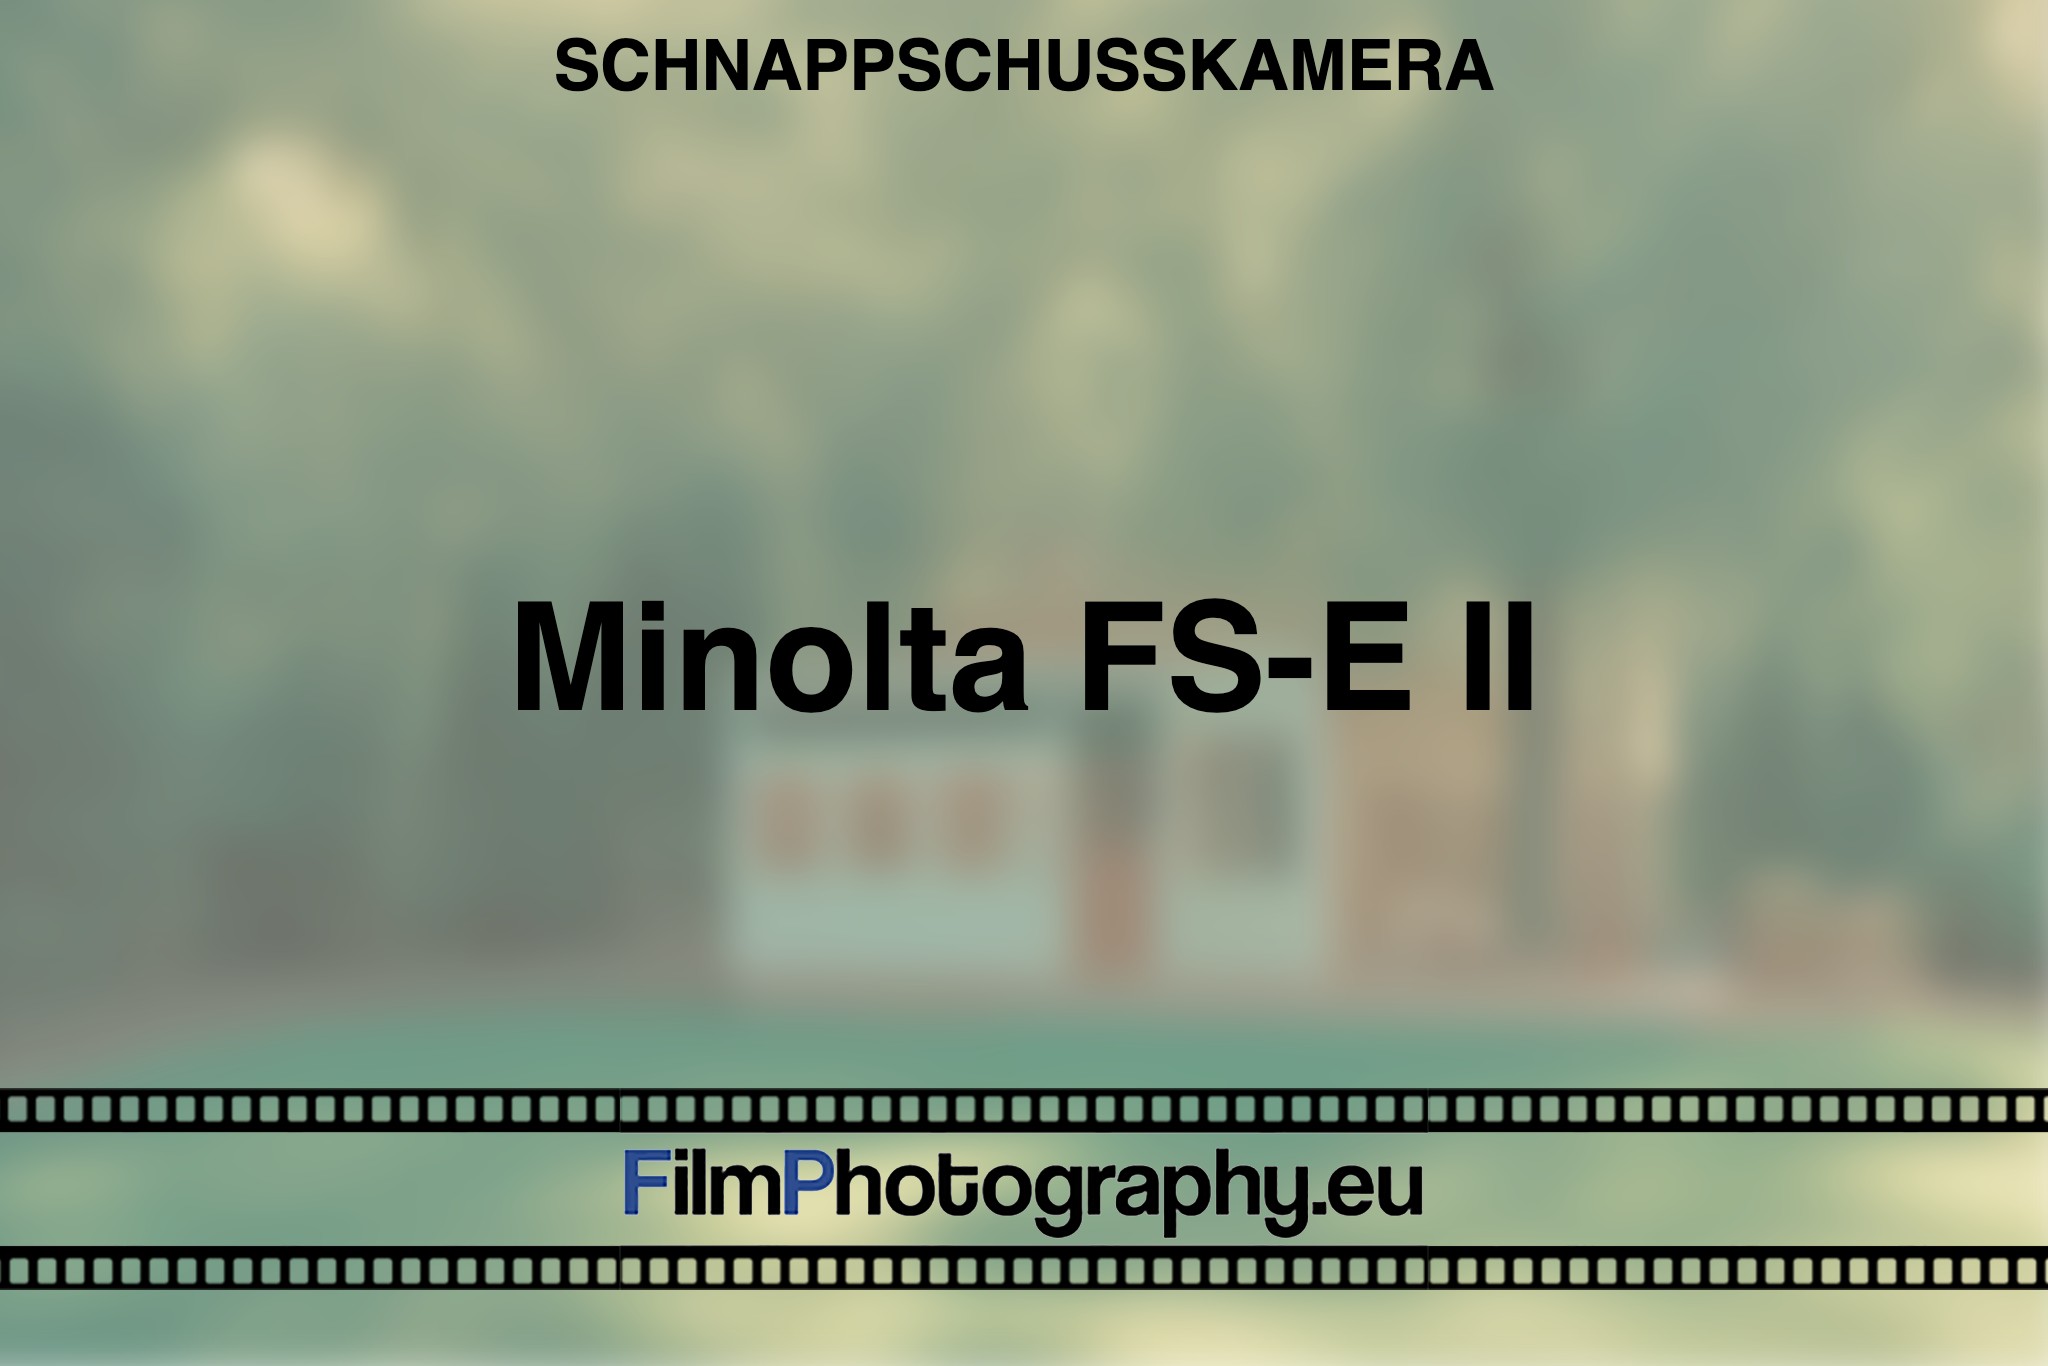 minolta-fs-e-ii-schnappschusskamera-bnv